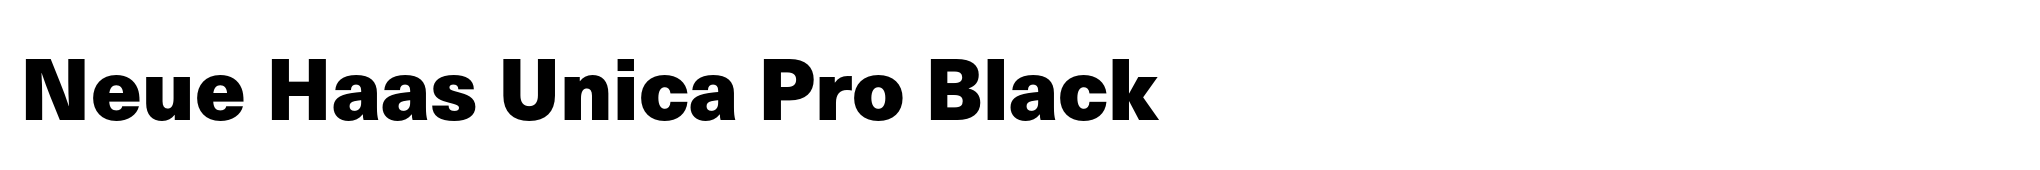 Neue Haas Unica Pro Black image